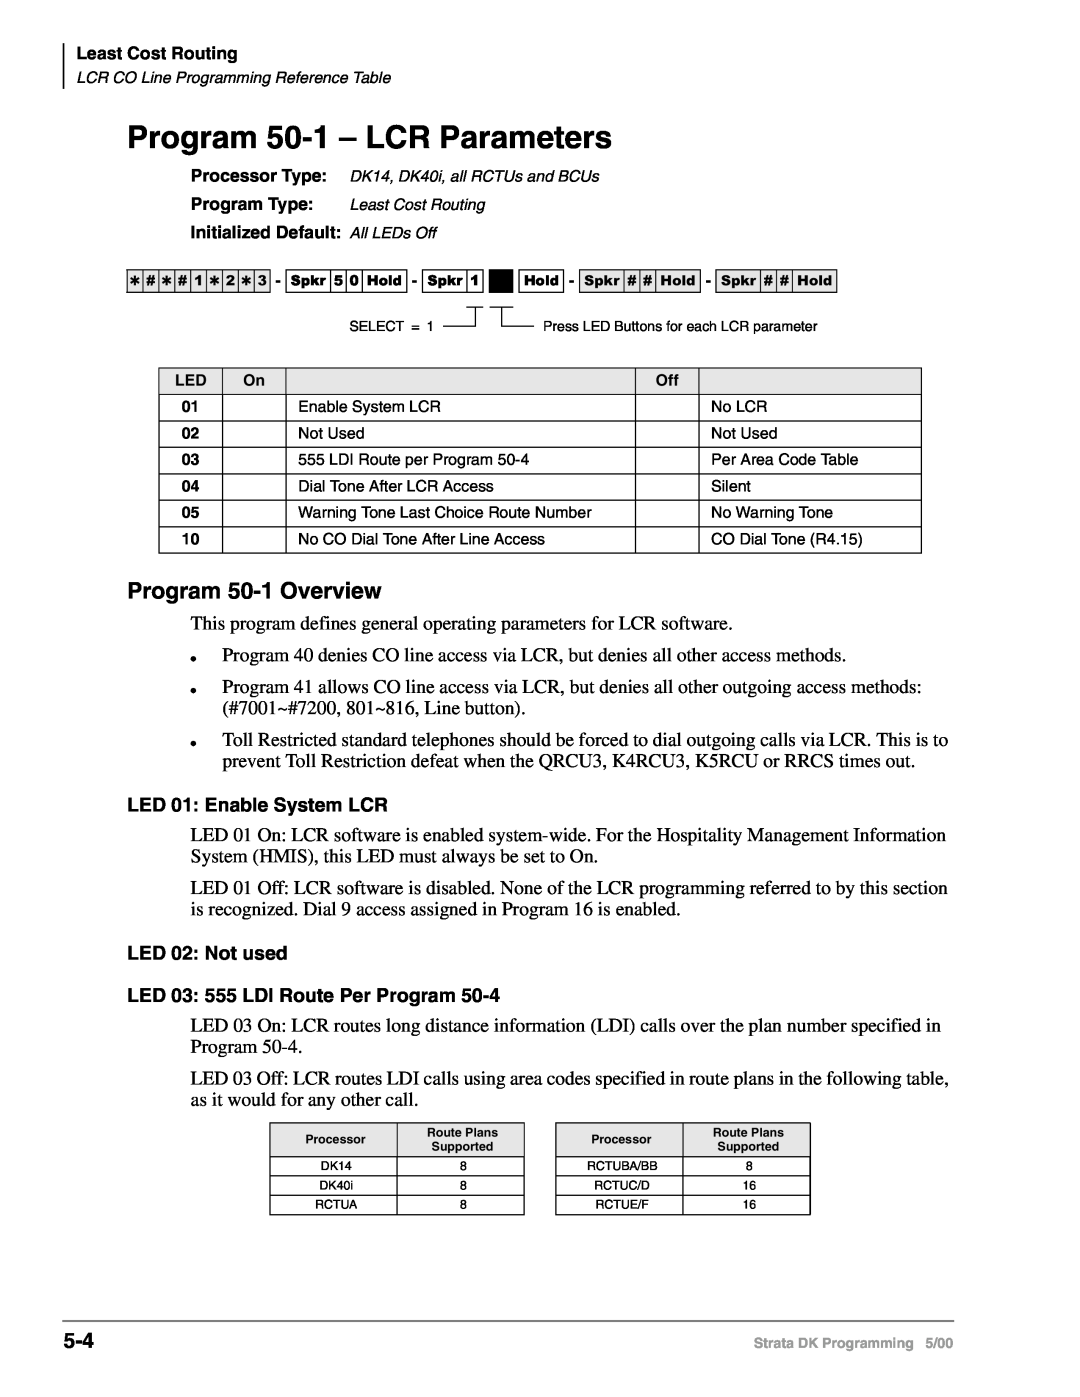 Toshiba DK40I, dk14, DK424 Program 50-1– LCR Parameters, Program 50-1Overview, LED 01 Enable System LCR, LED 02: Not used 